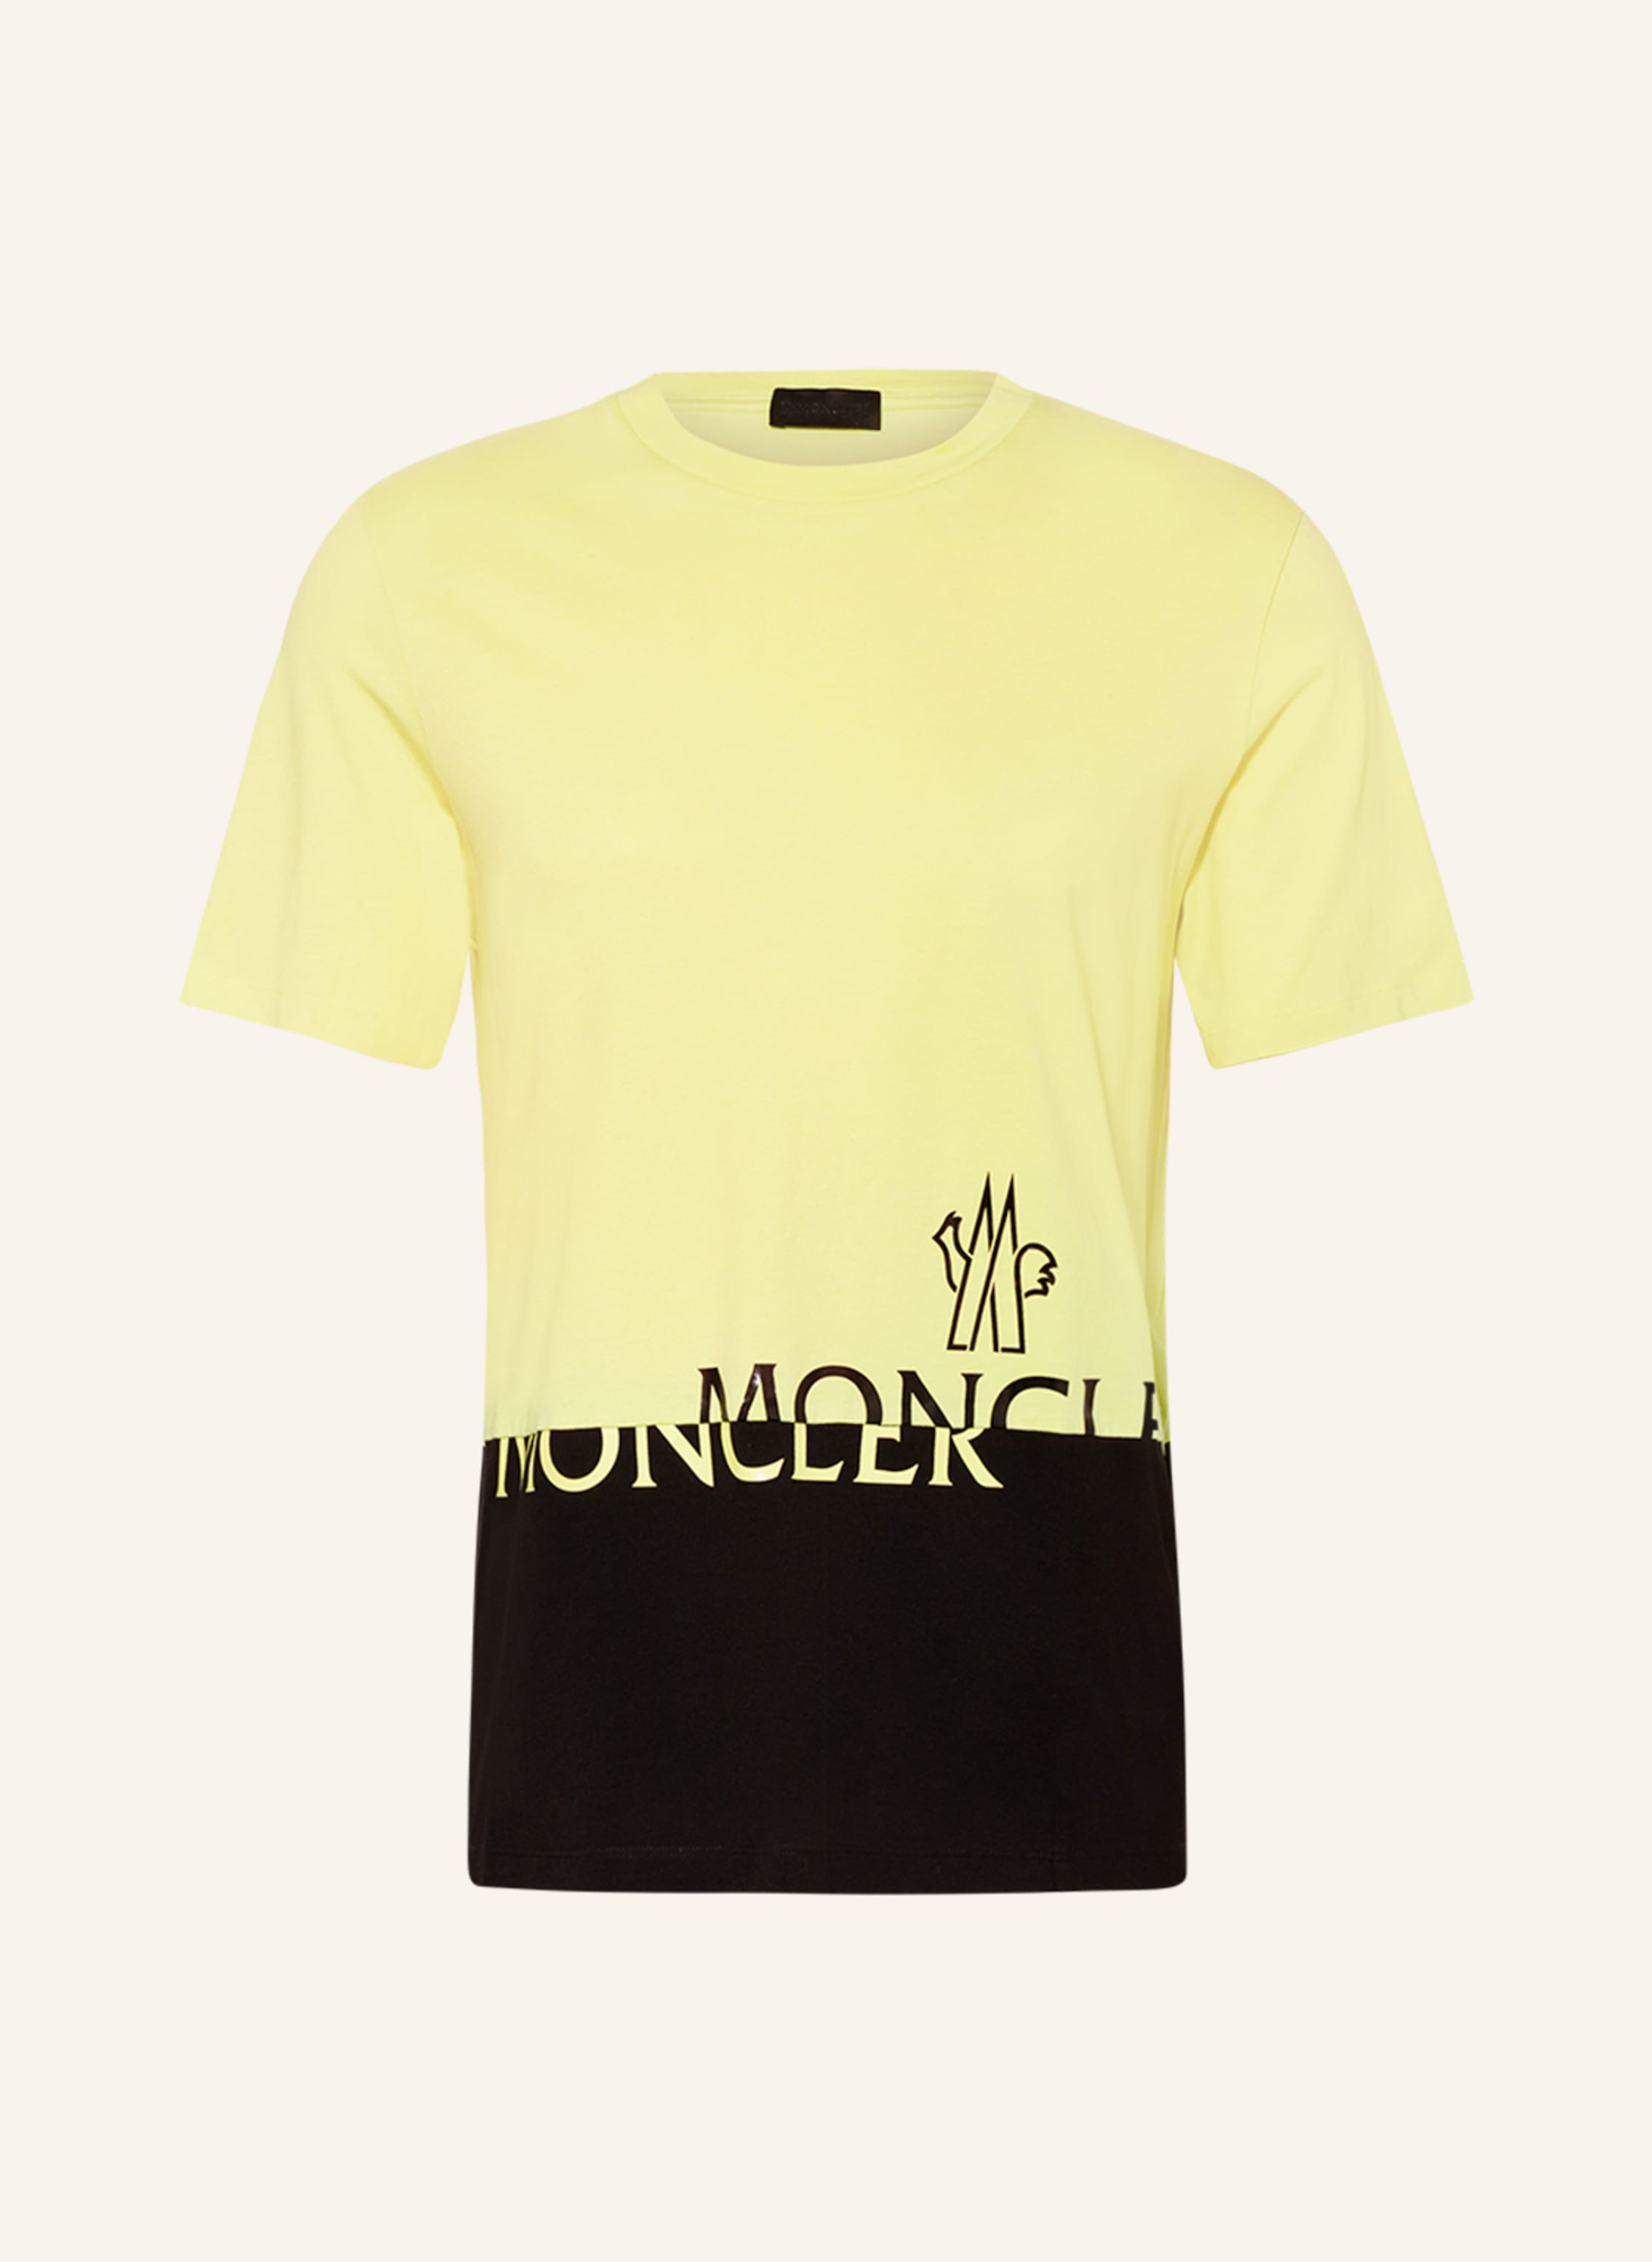 MONCLER T-shirt in yellow